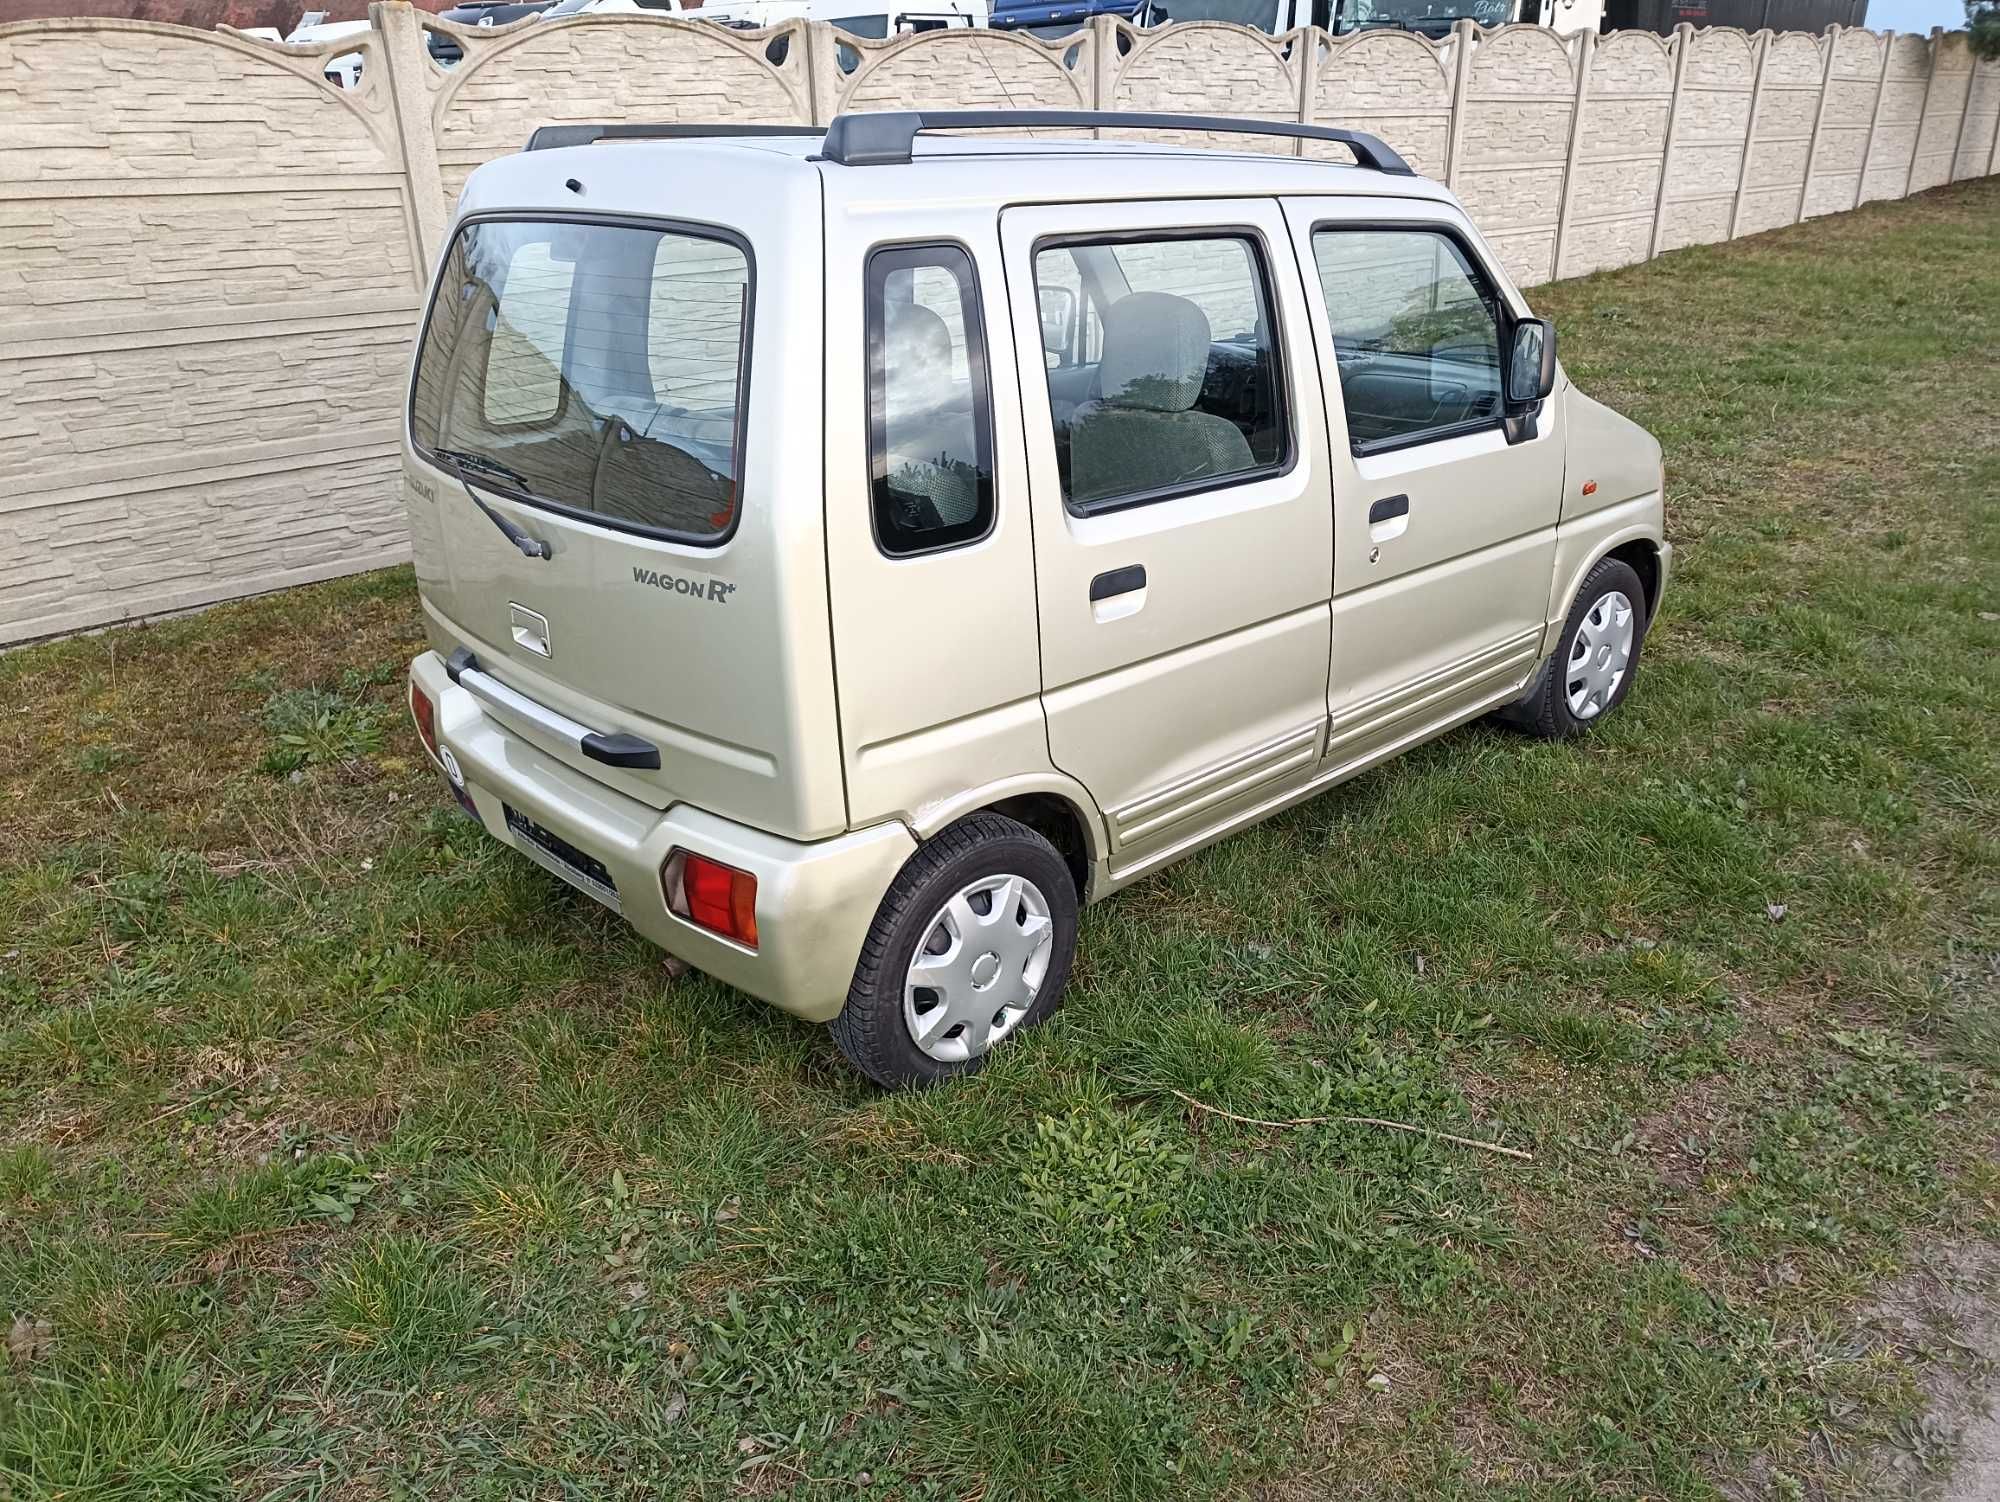 Suzuki wagon R 1,3 benzyna